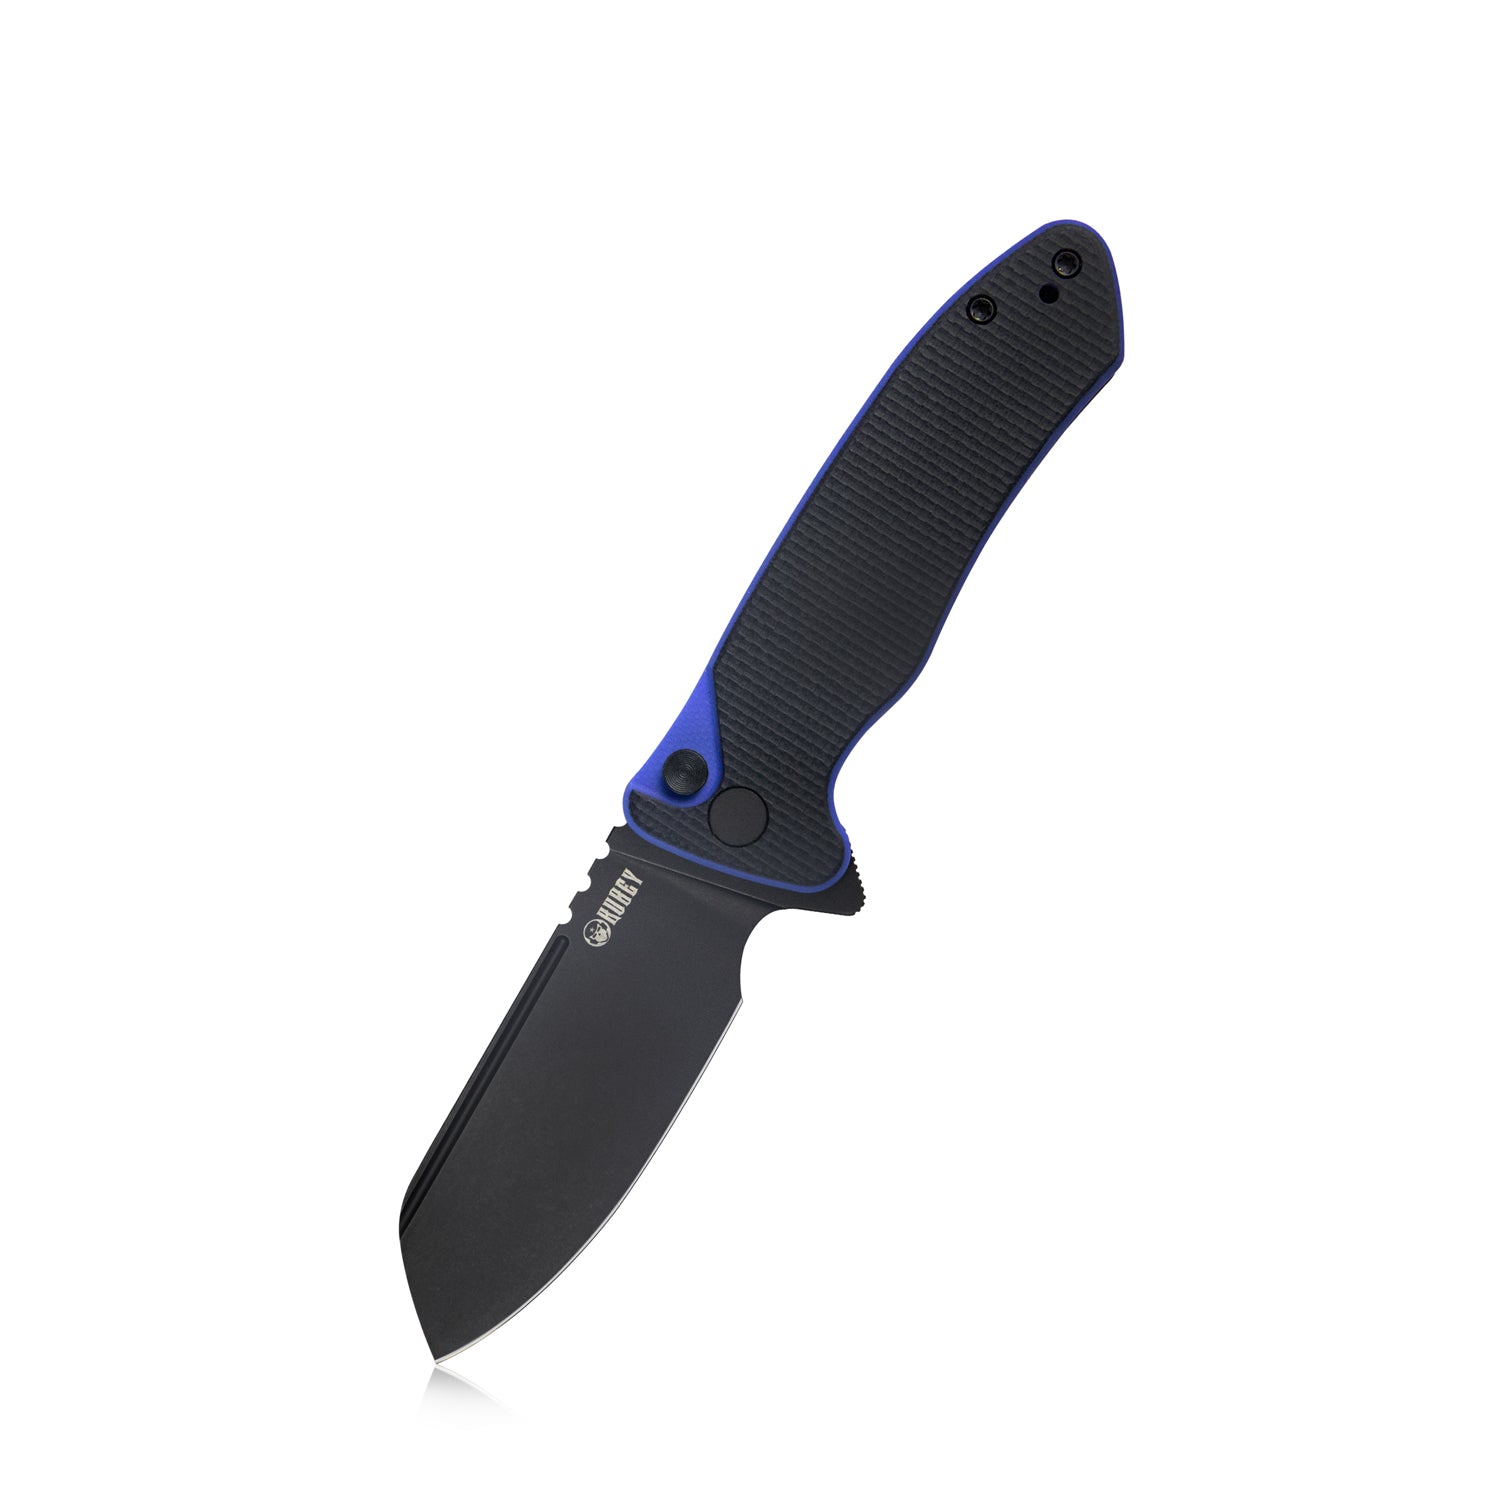 Kubey Creon Small Pocket Knife with Button Lock Black-blue G10 Handle 2.87" Blackwashed AUS-10 KU336D